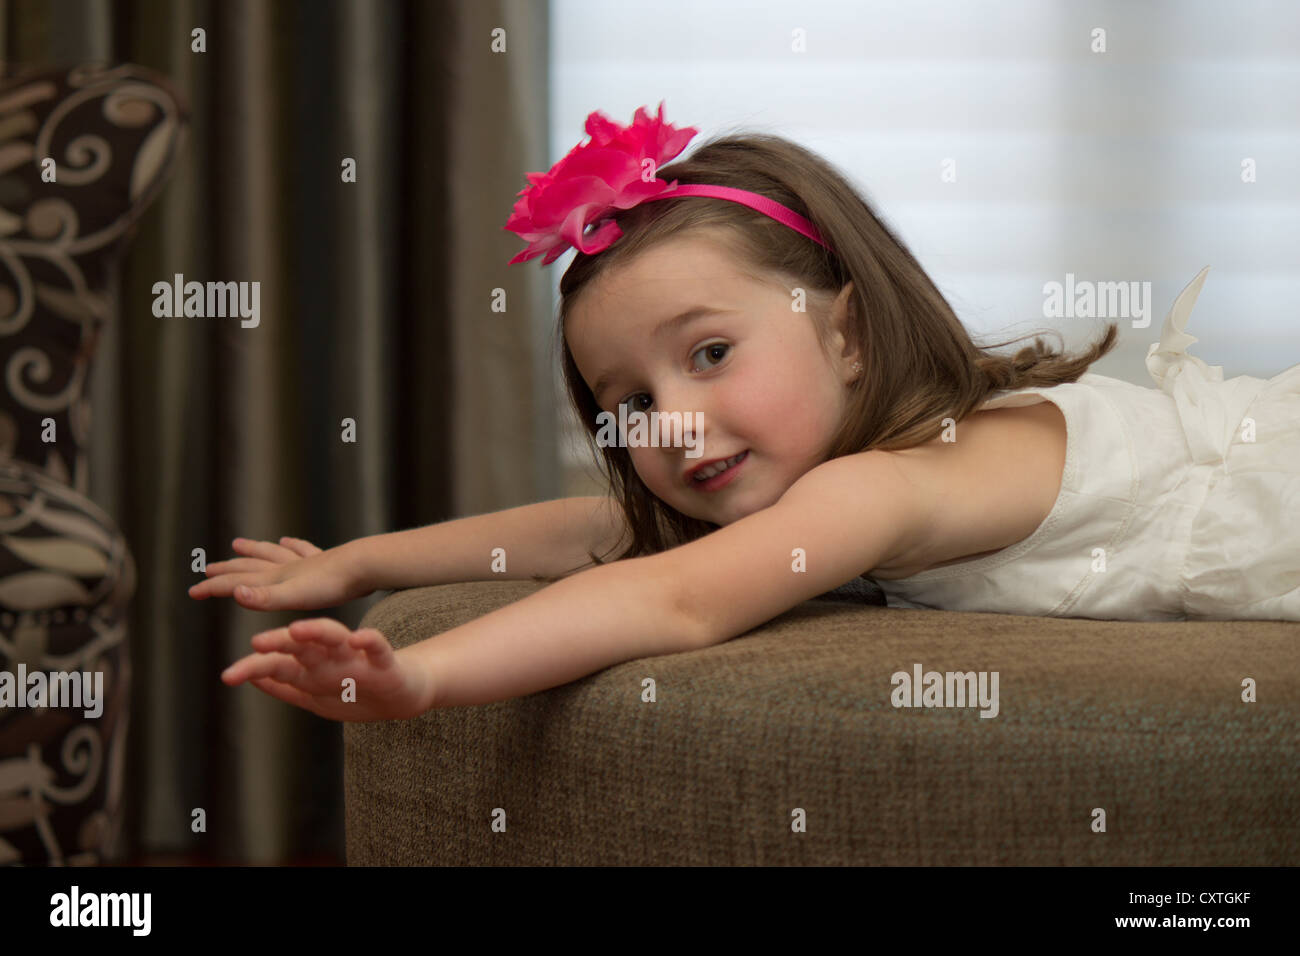 Playful, happy child posing. Stock Photo